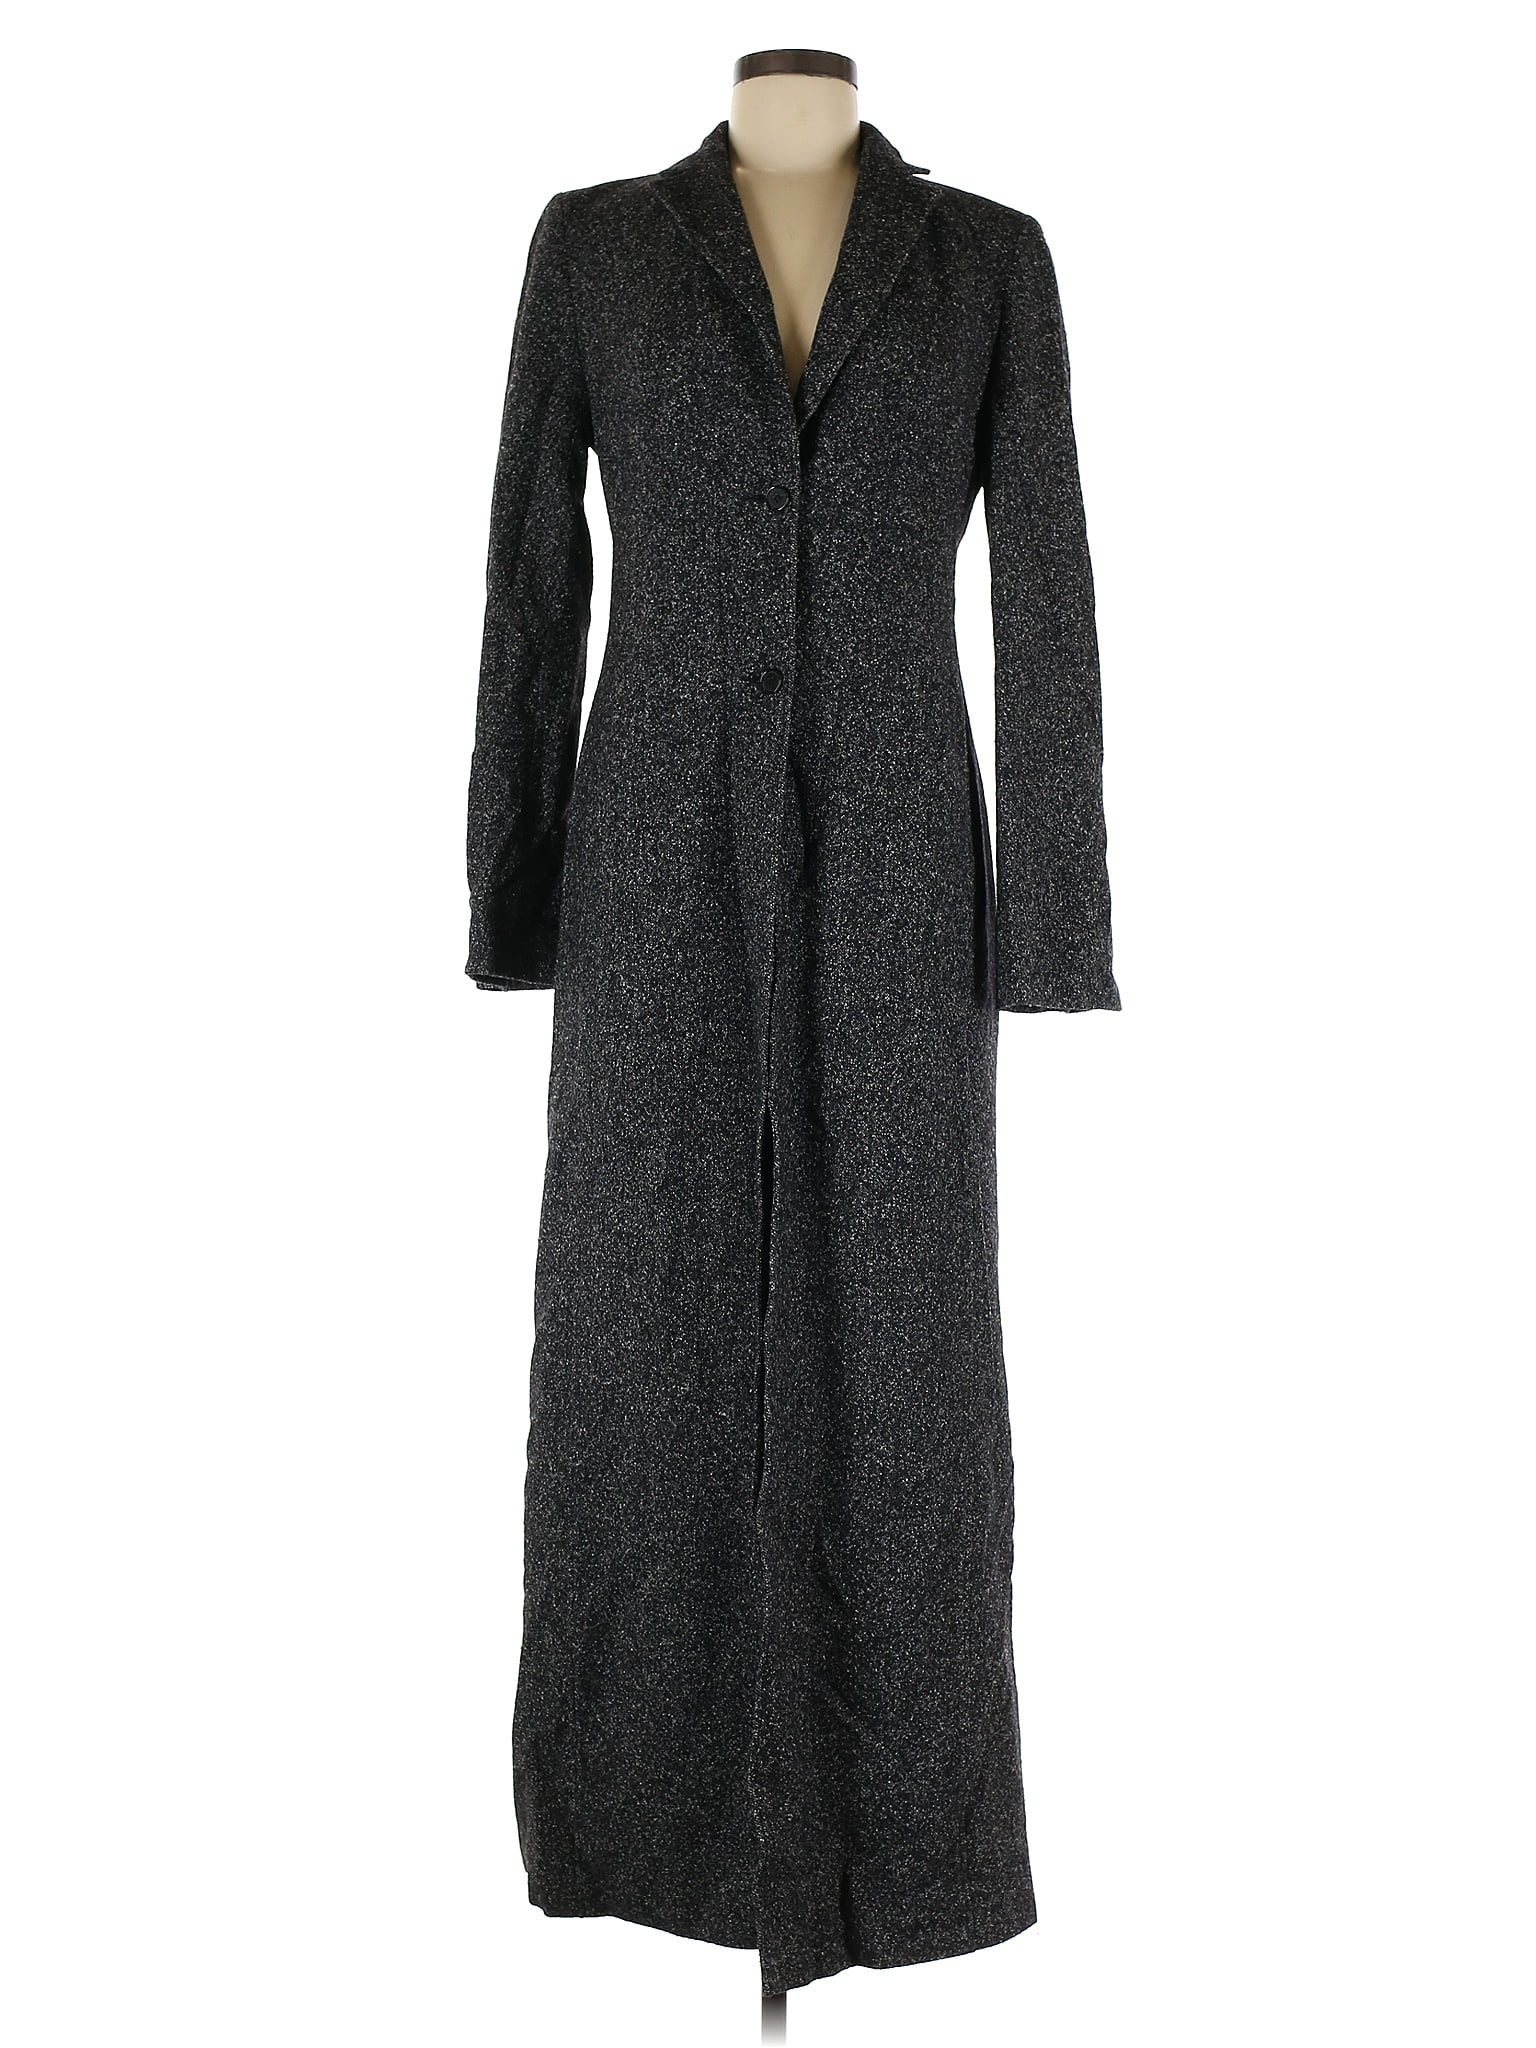 Lida Baday Black Jacket Size 6 - 79% off | thredUP